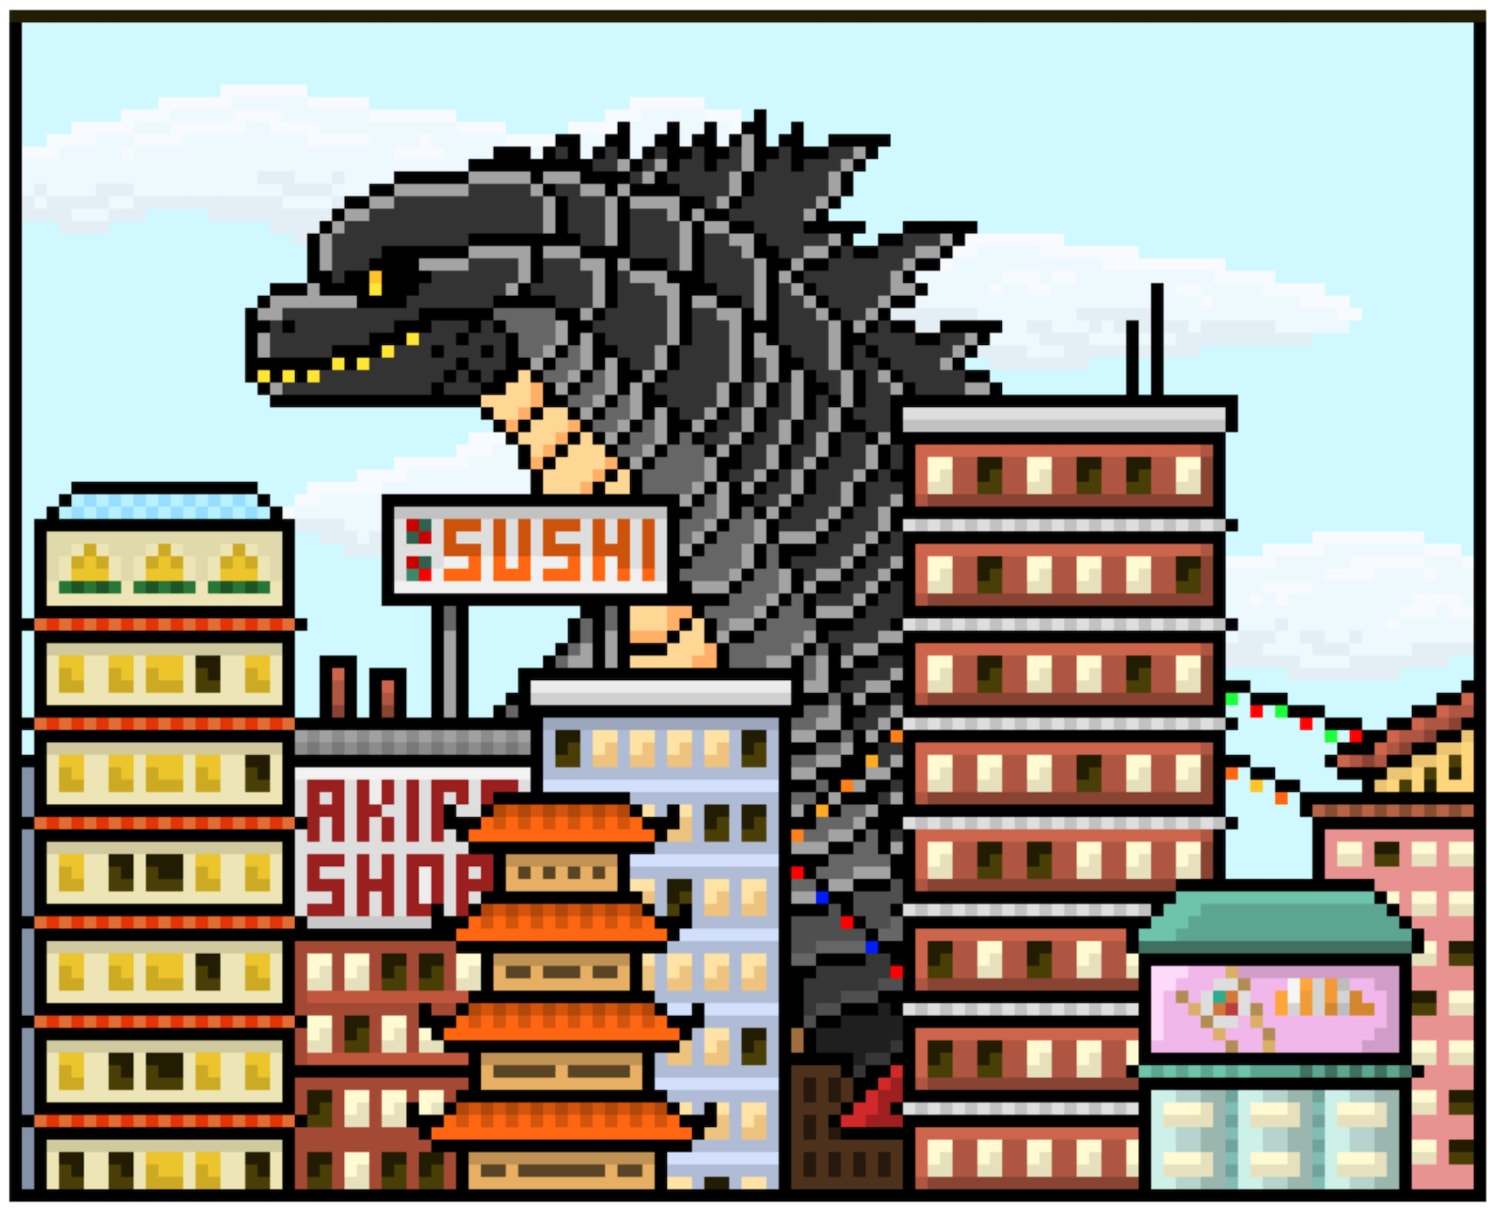 Godzilla in Japan (by me)